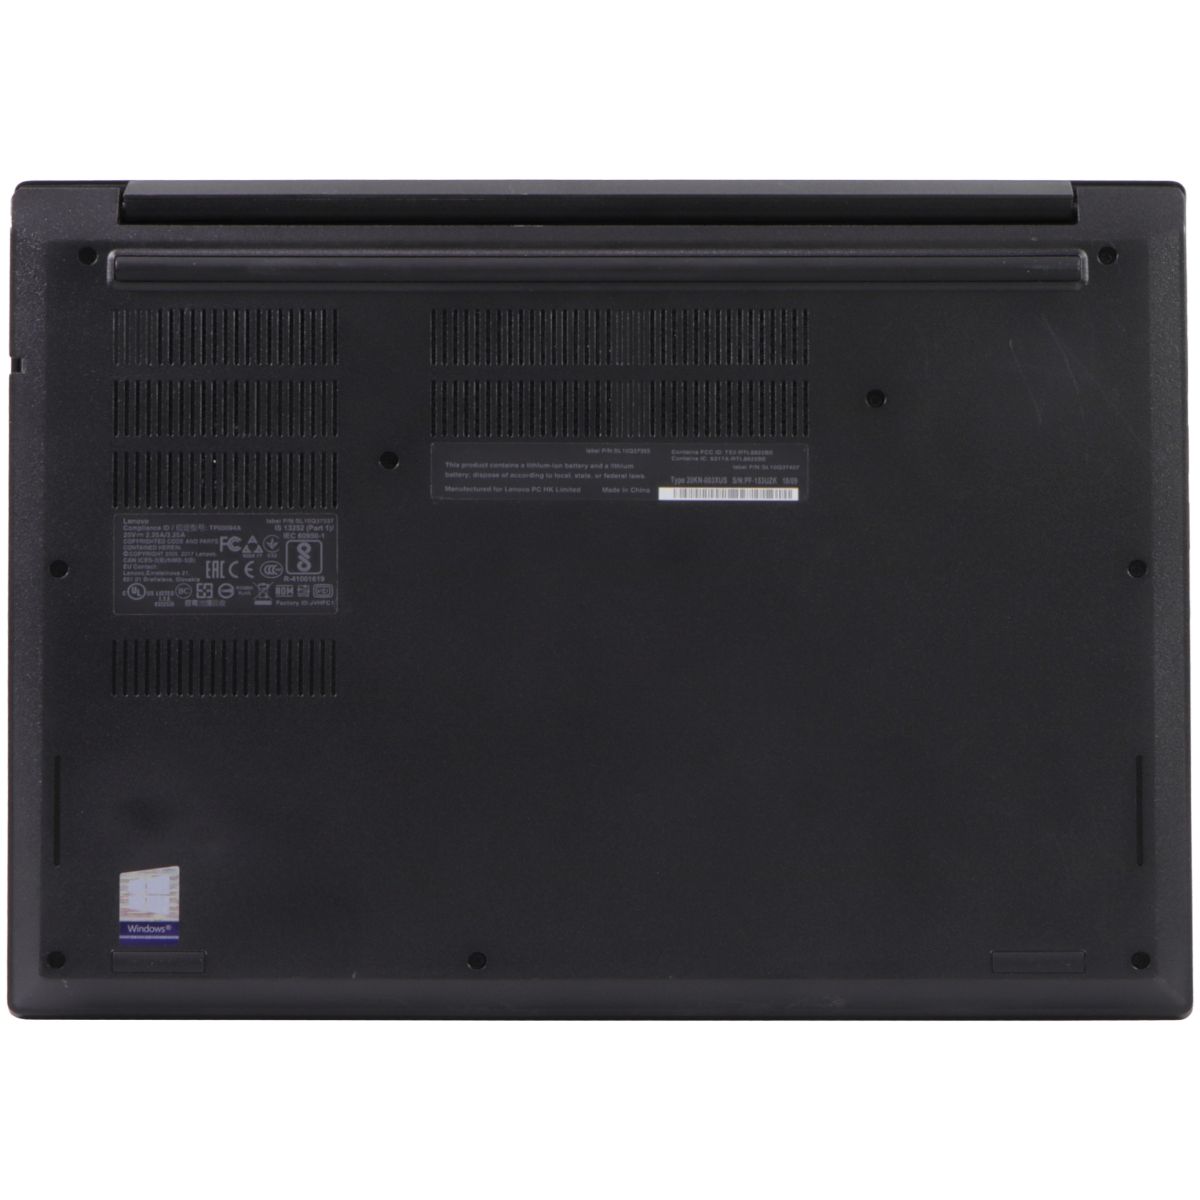 Lenovo ThinkPad E480 (14-in) Laptop (20KN-003YUS) i5-7200U/256GB/16GB/10 Pro Laptops - PC Laptops & Netbooks Lenovo    - Simple Cell Bulk Wholesale Pricing - USA Seller